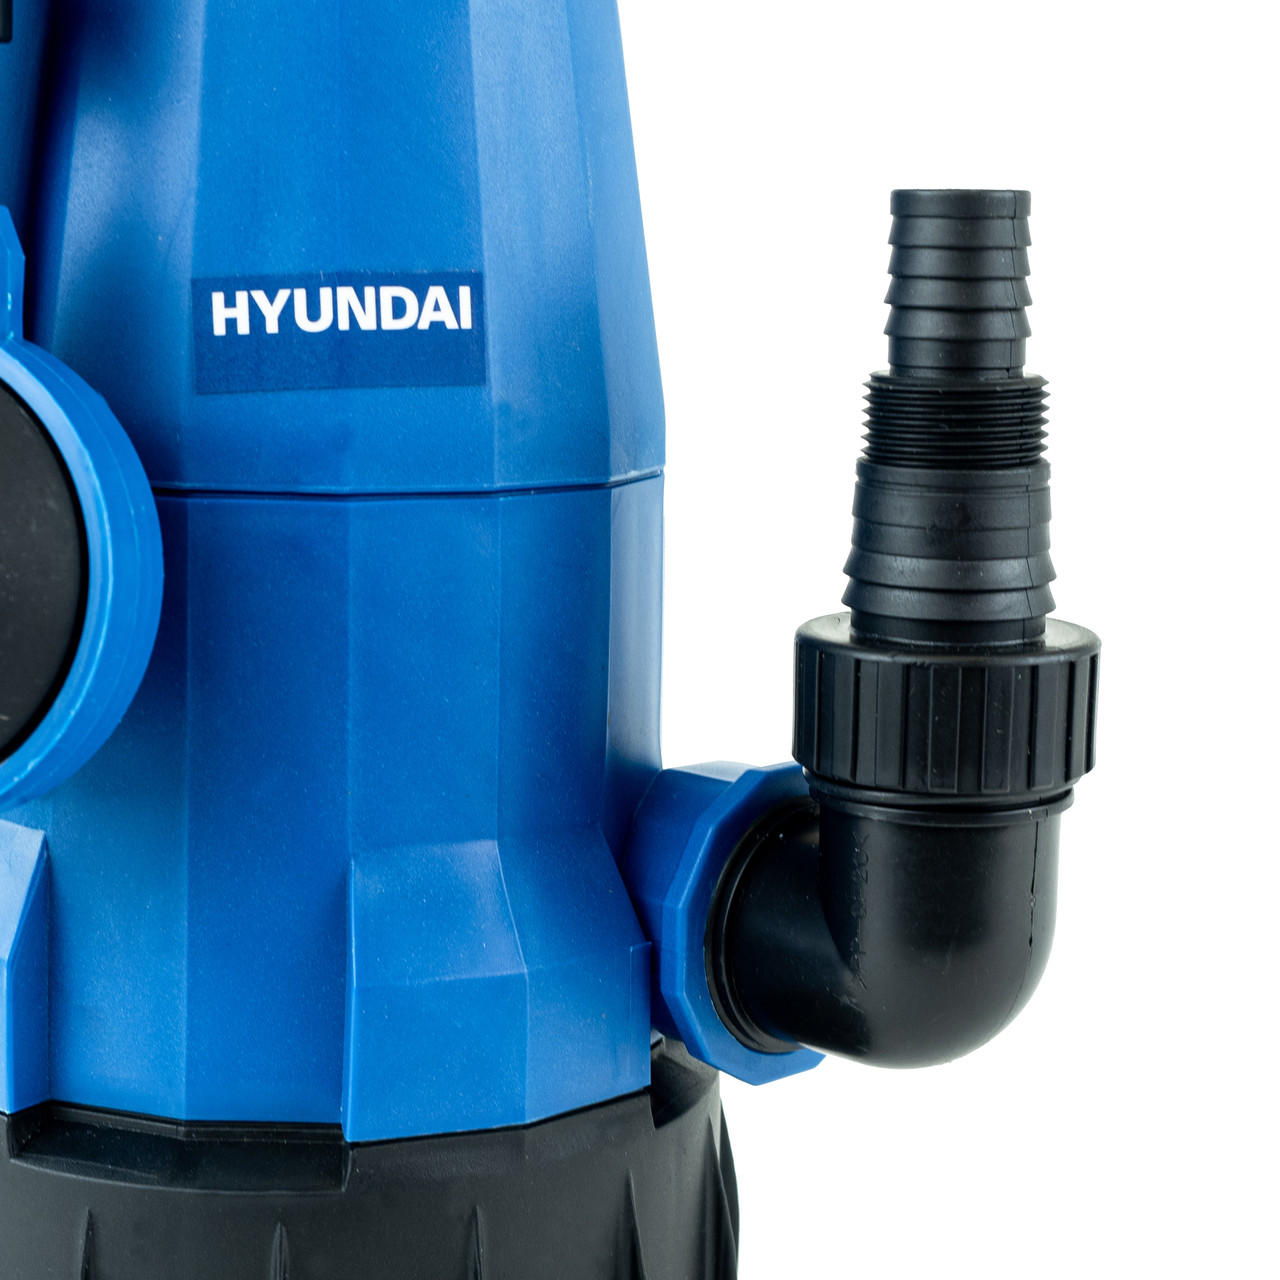 Hyundai HYSP550CD Electric Submersible Water Pump - 550W